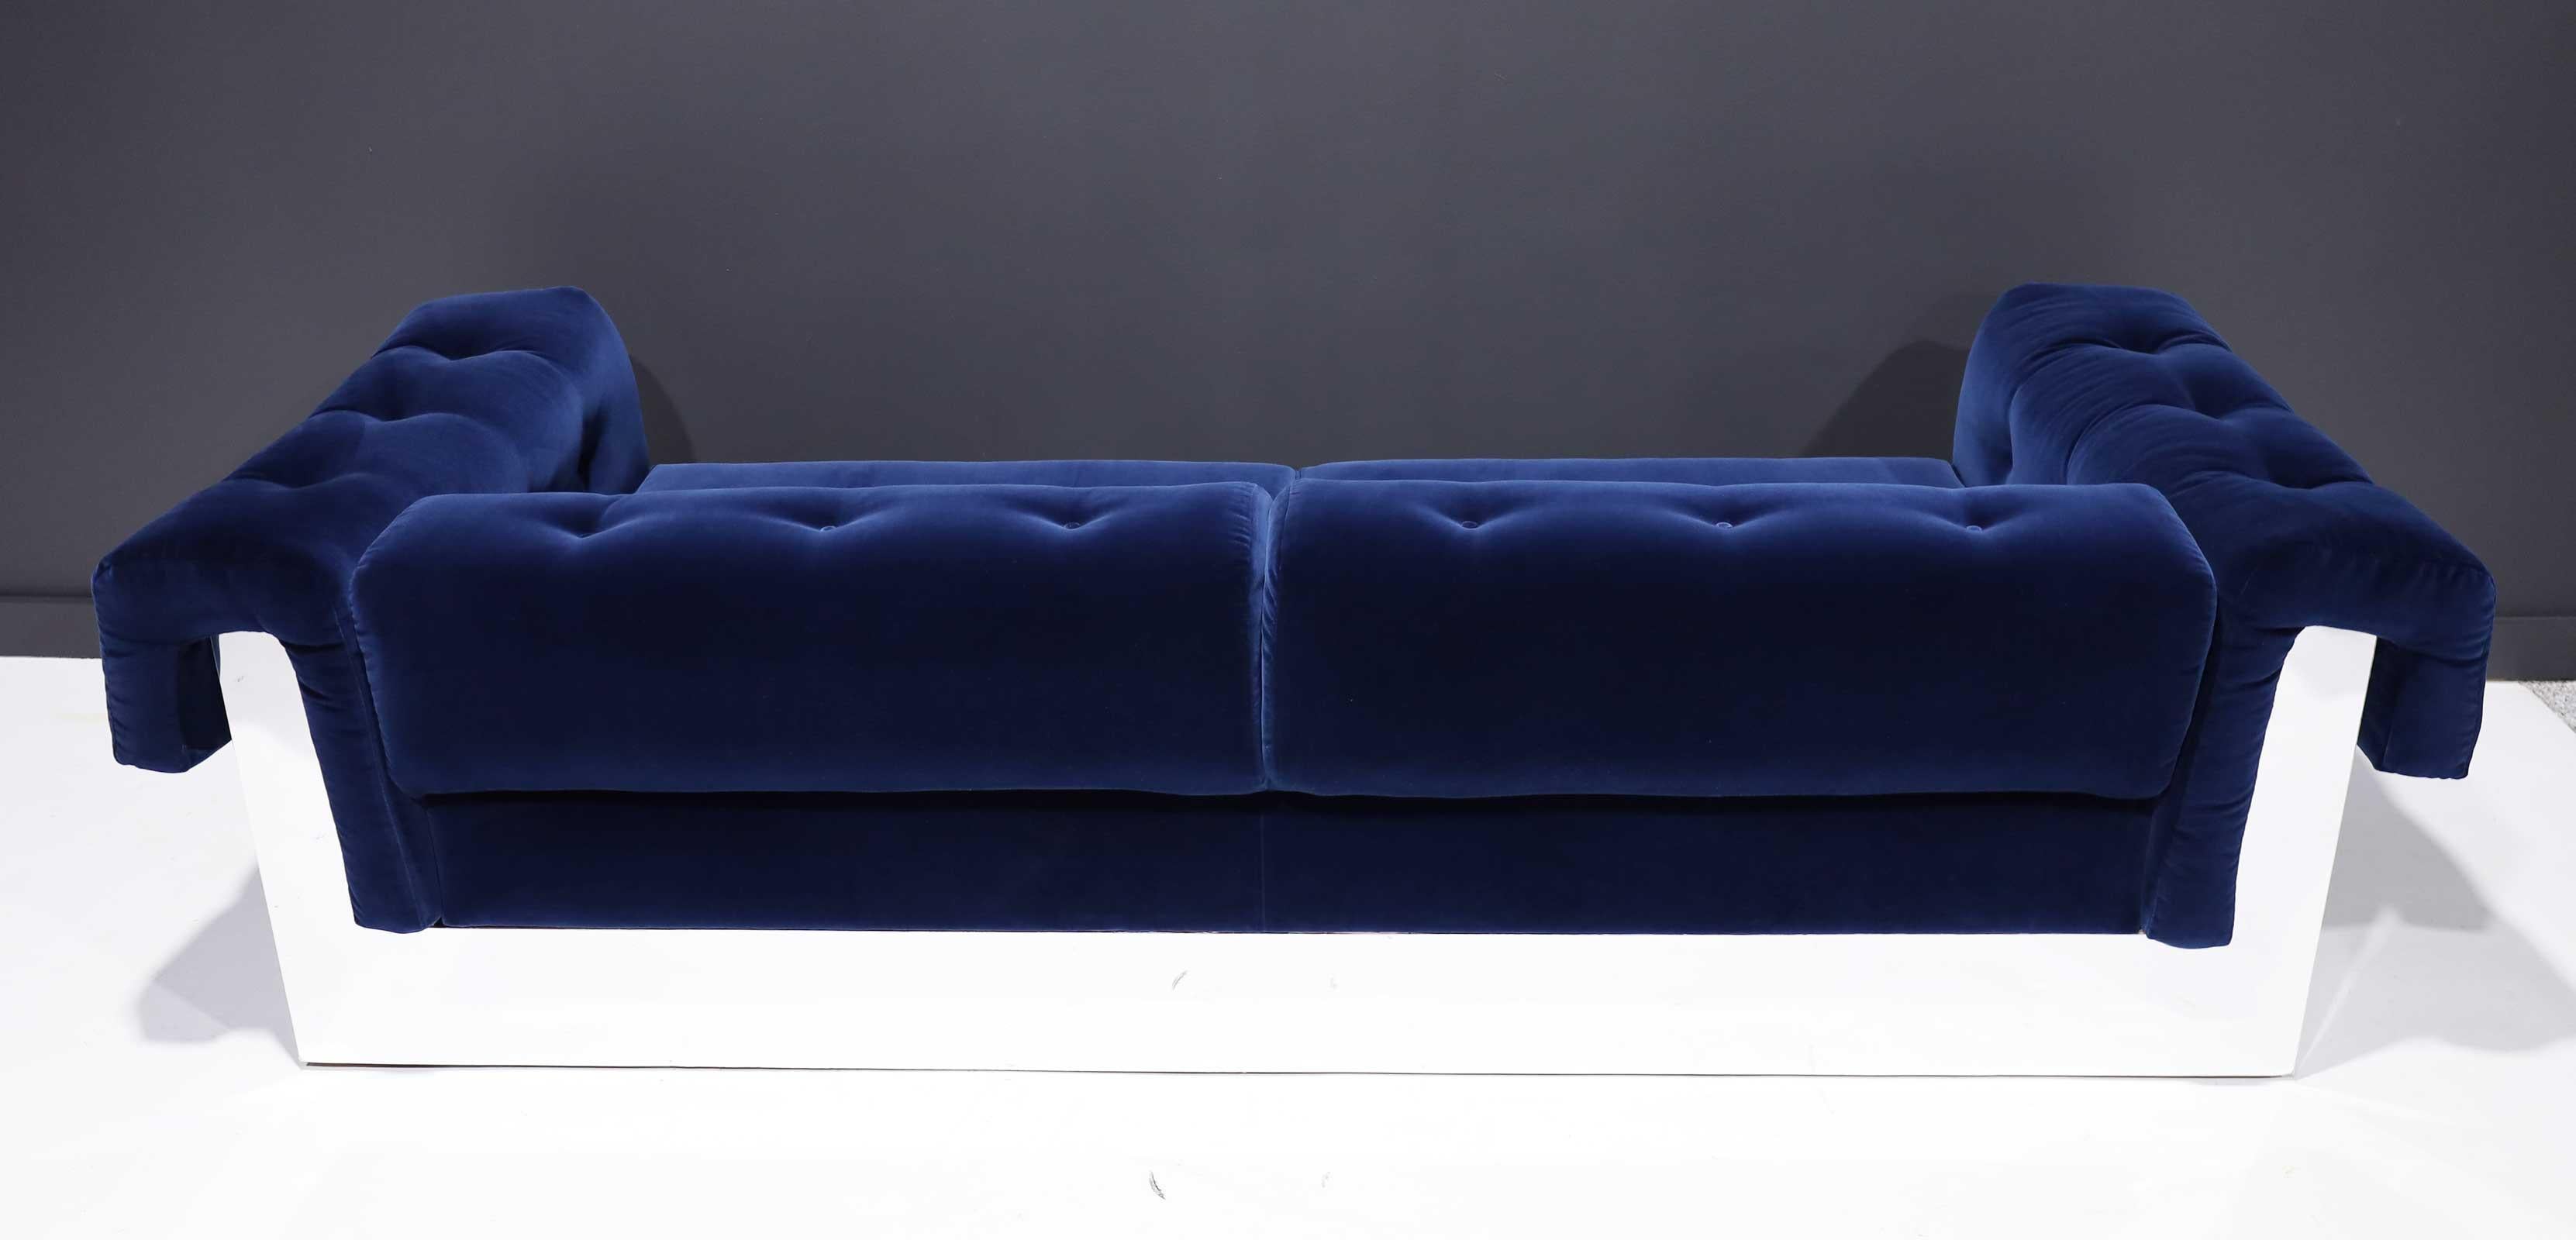 Milo Baughman Button Tufted Chrome Sofa in a Navy Blue Velvet from France 1